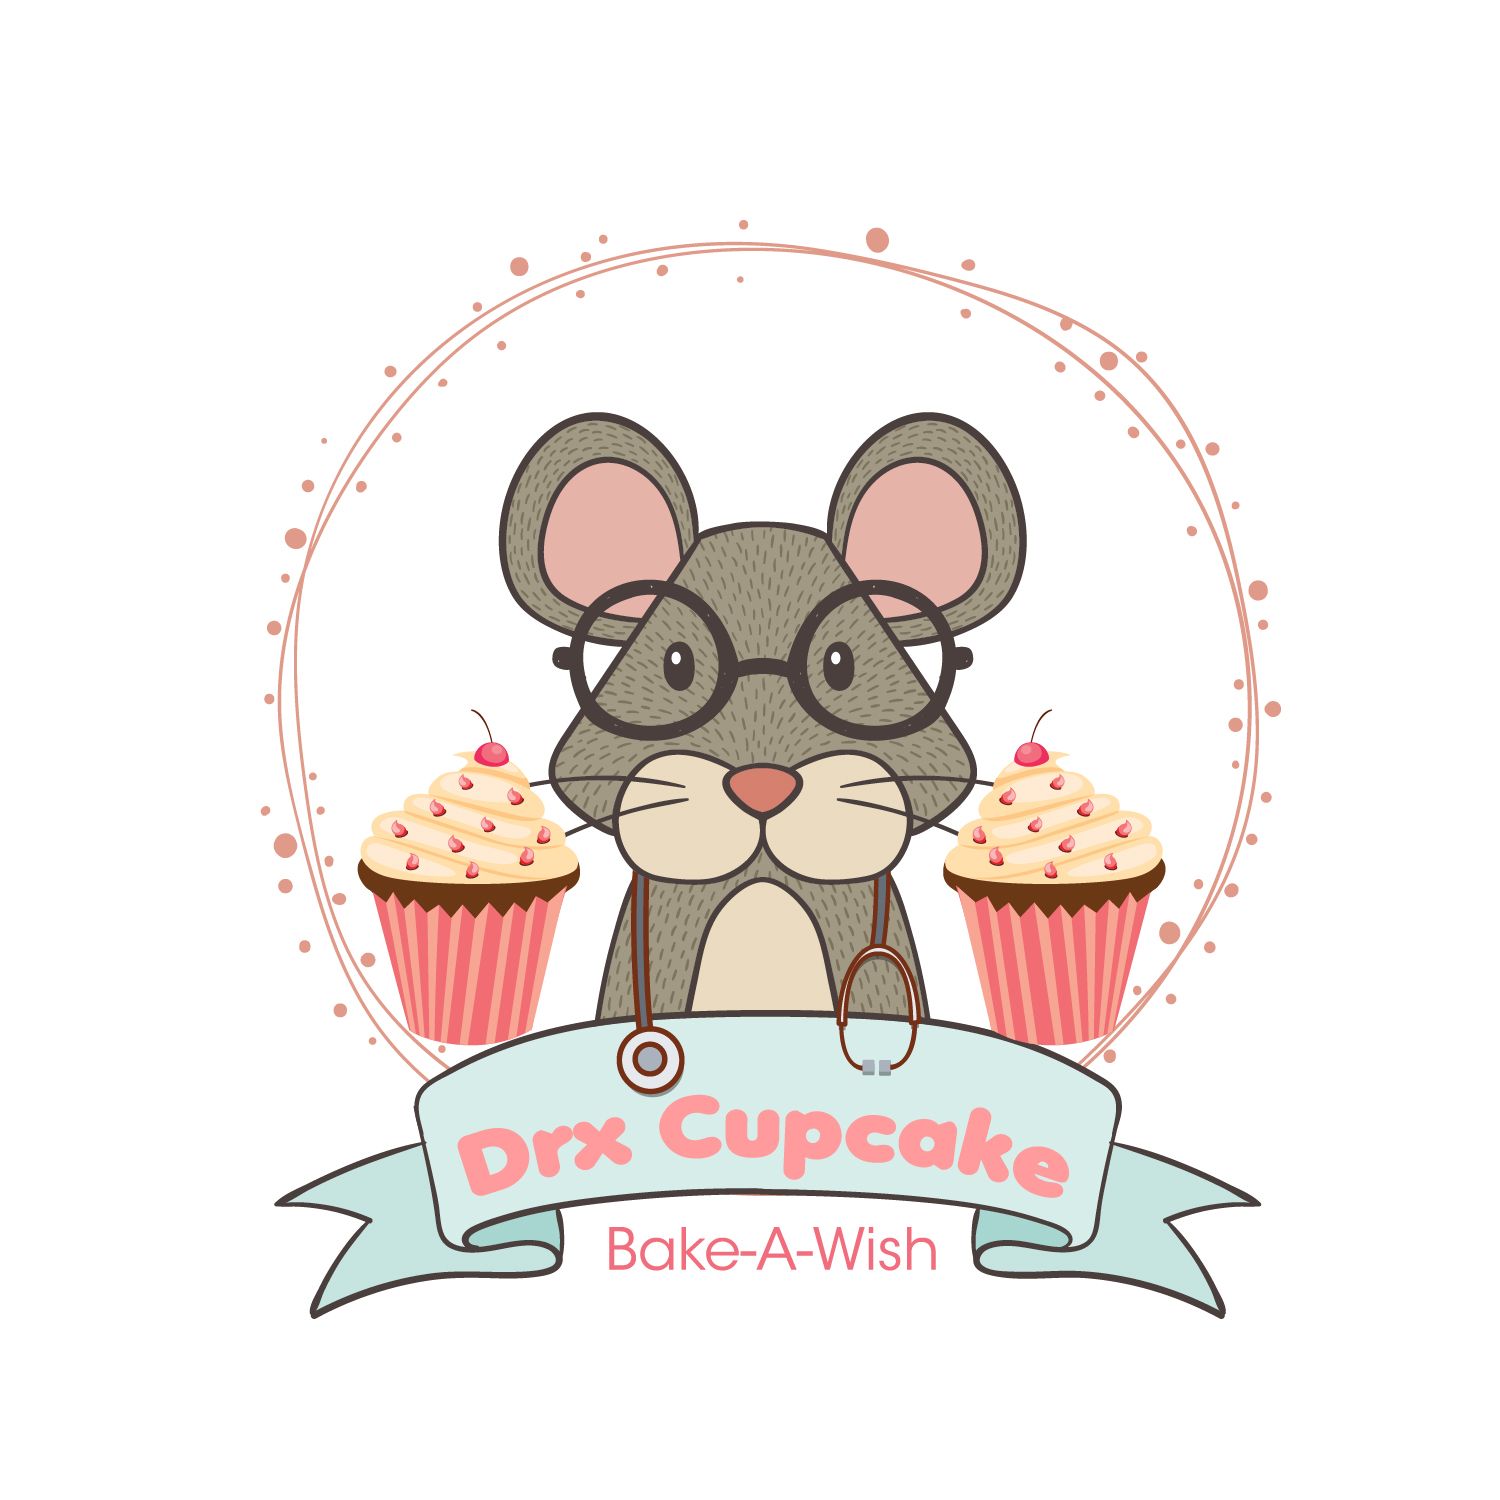 Drx Cupcake